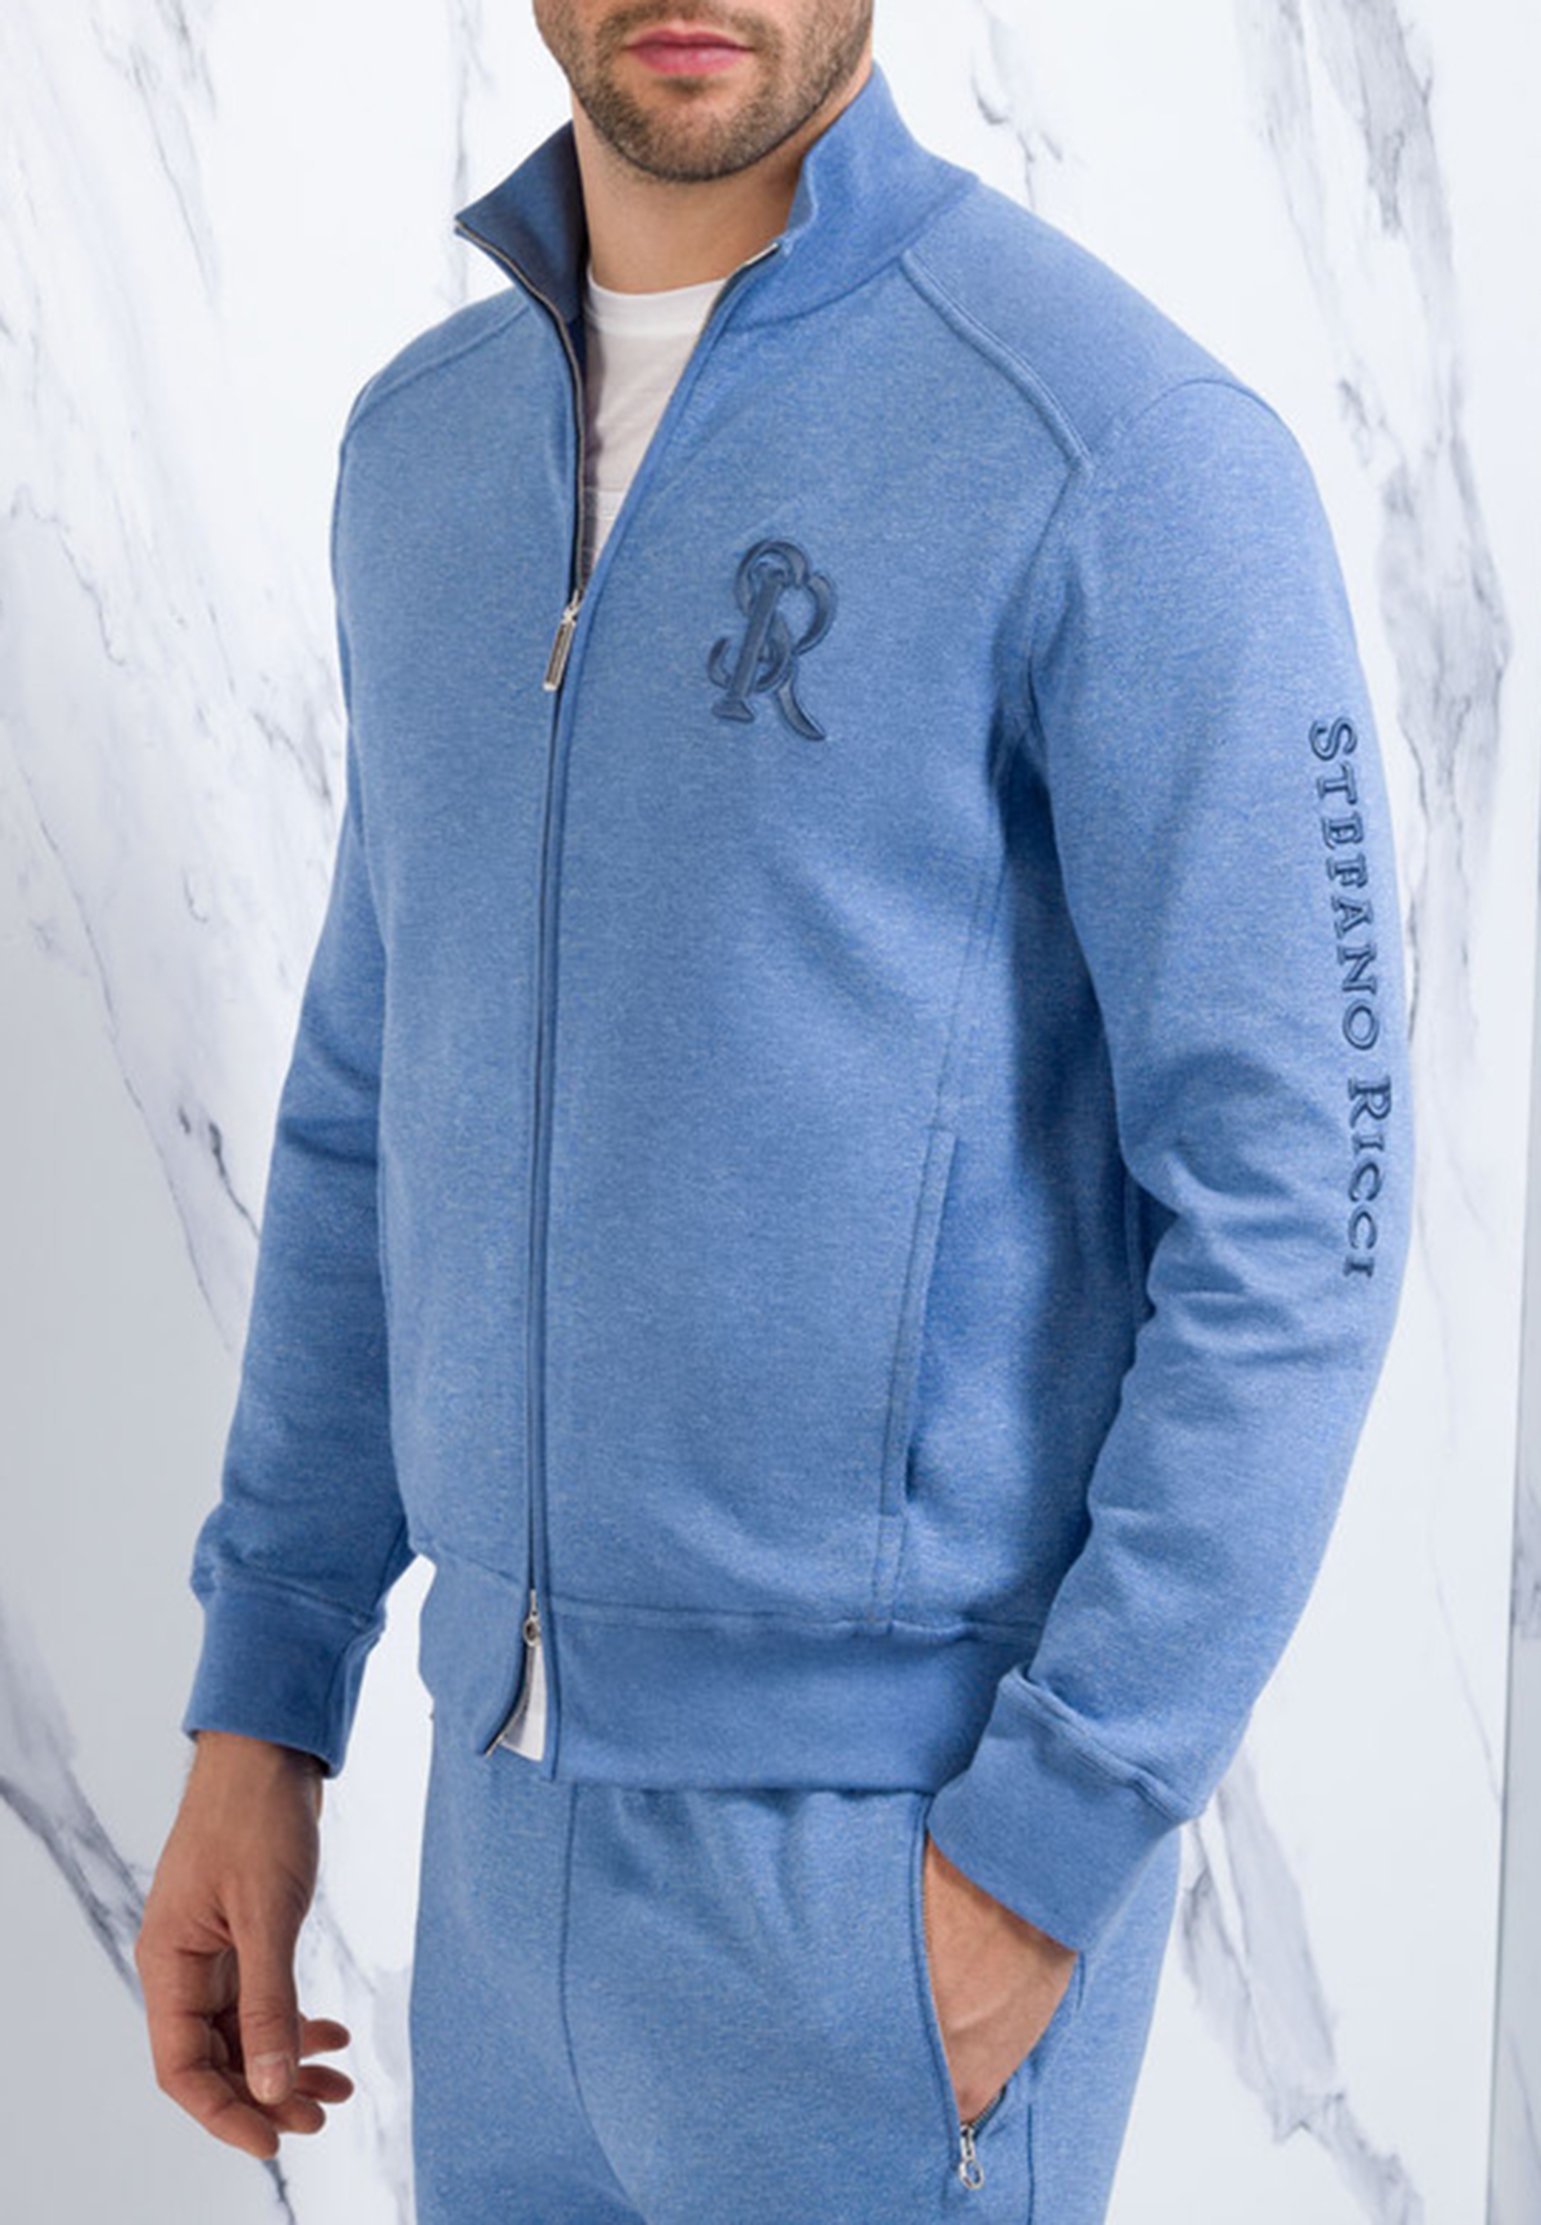 Sweatshirt STEFANO RICCI Color: blue (Code: 650) in online store Allure